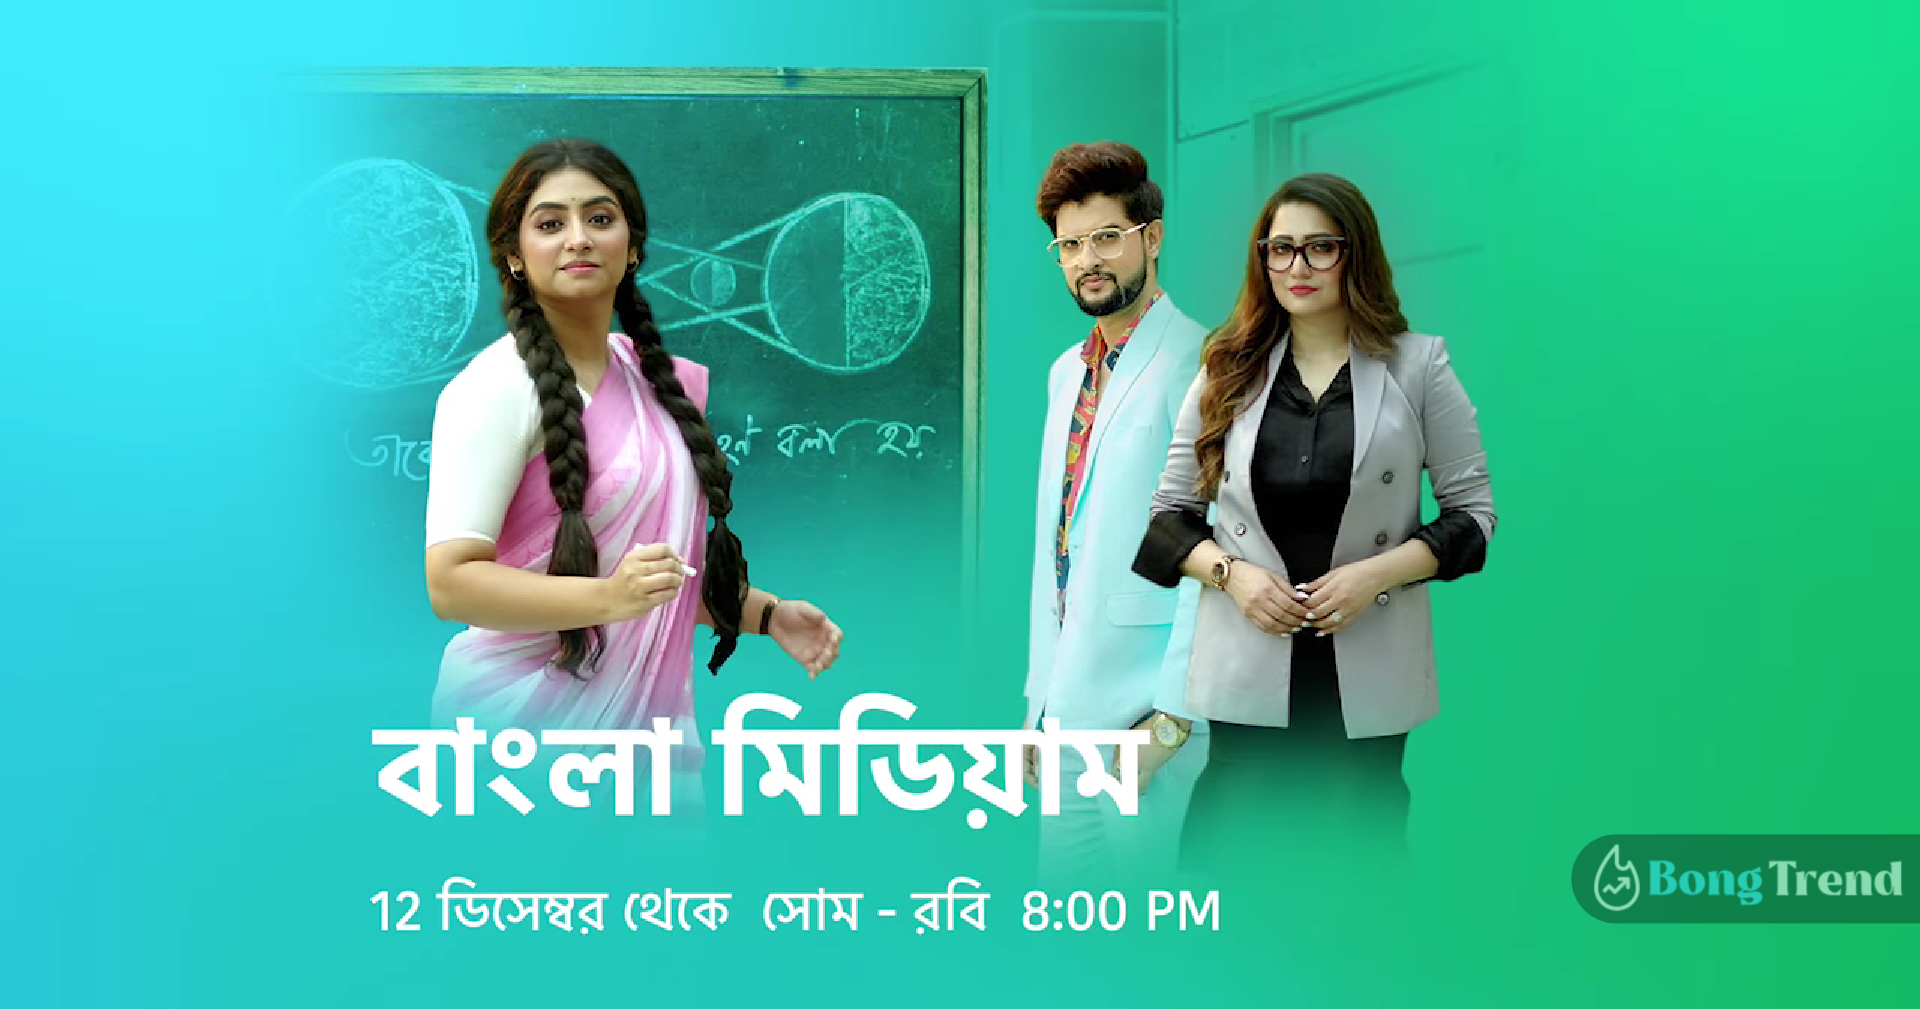 Upcoming new serial Bangla Medium time slot announced